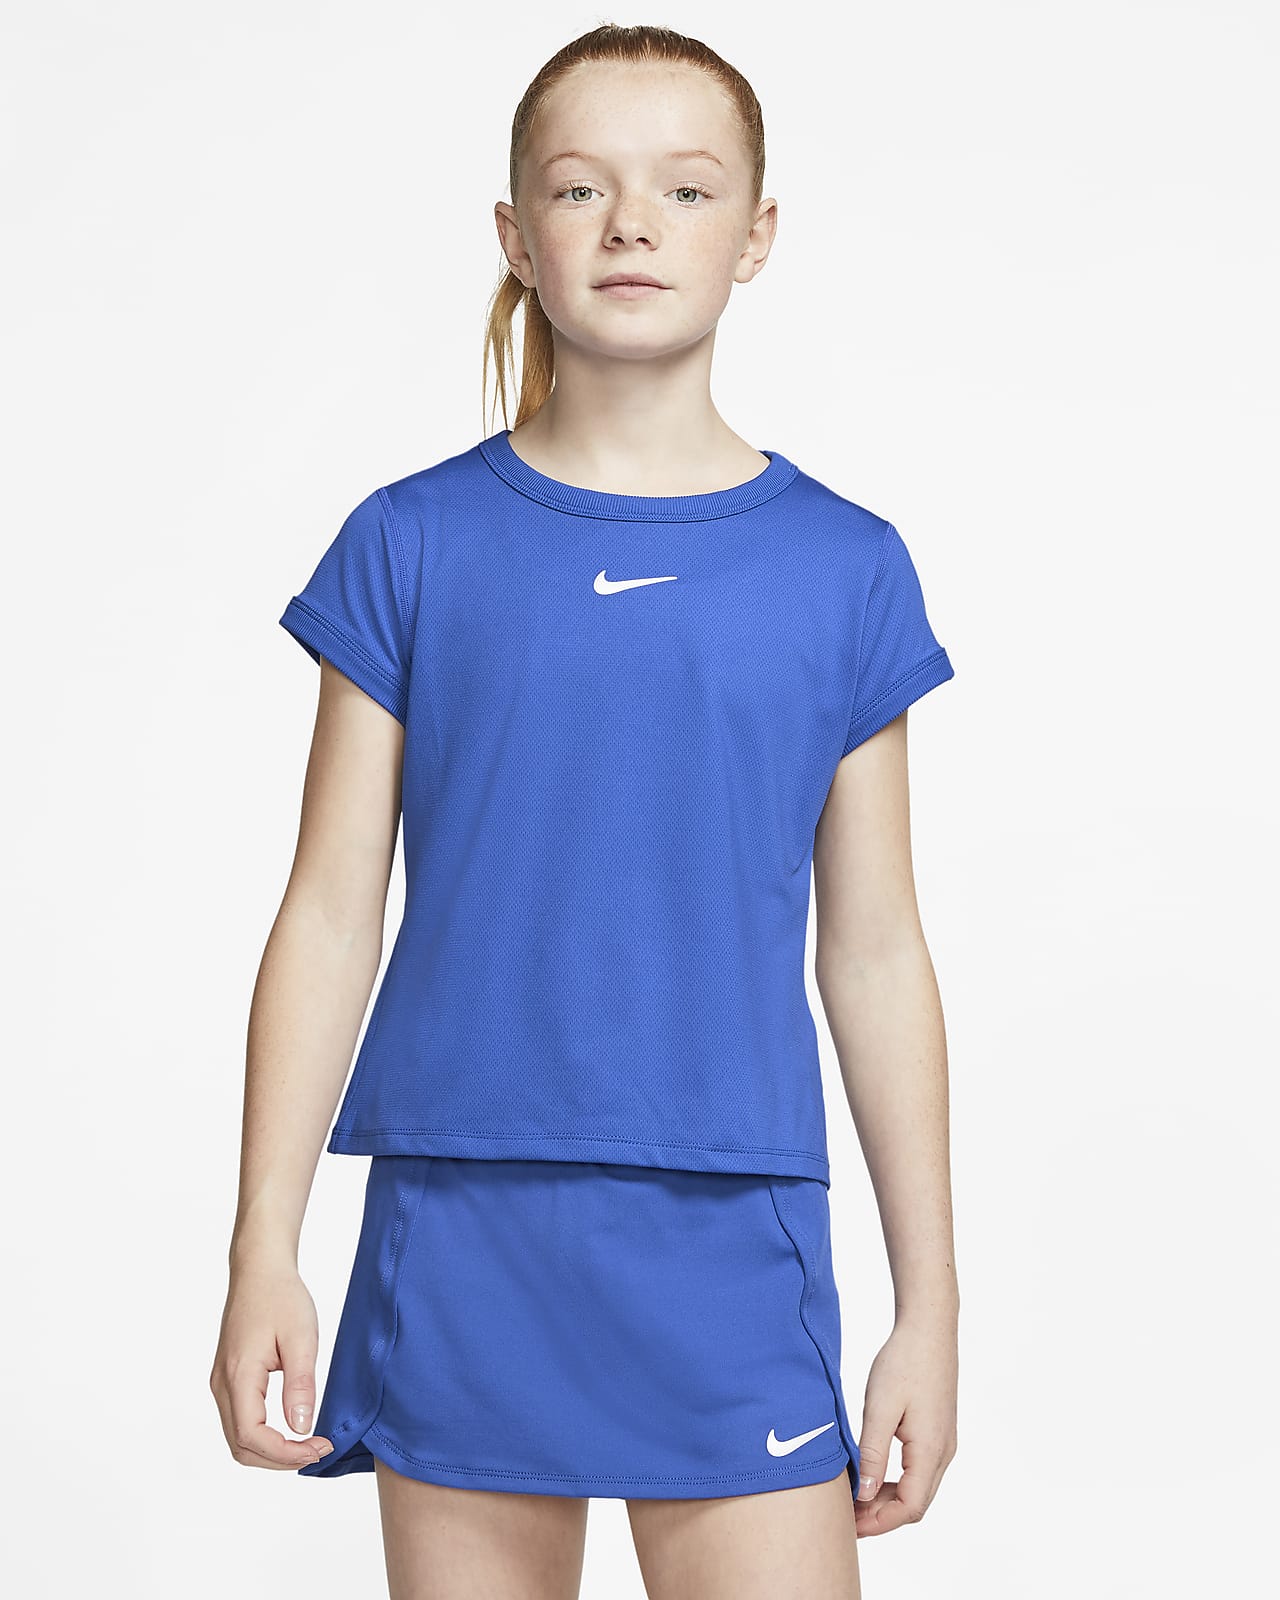 NikeCourt Big Kids' (Girls') Tennis Top. Nike.com